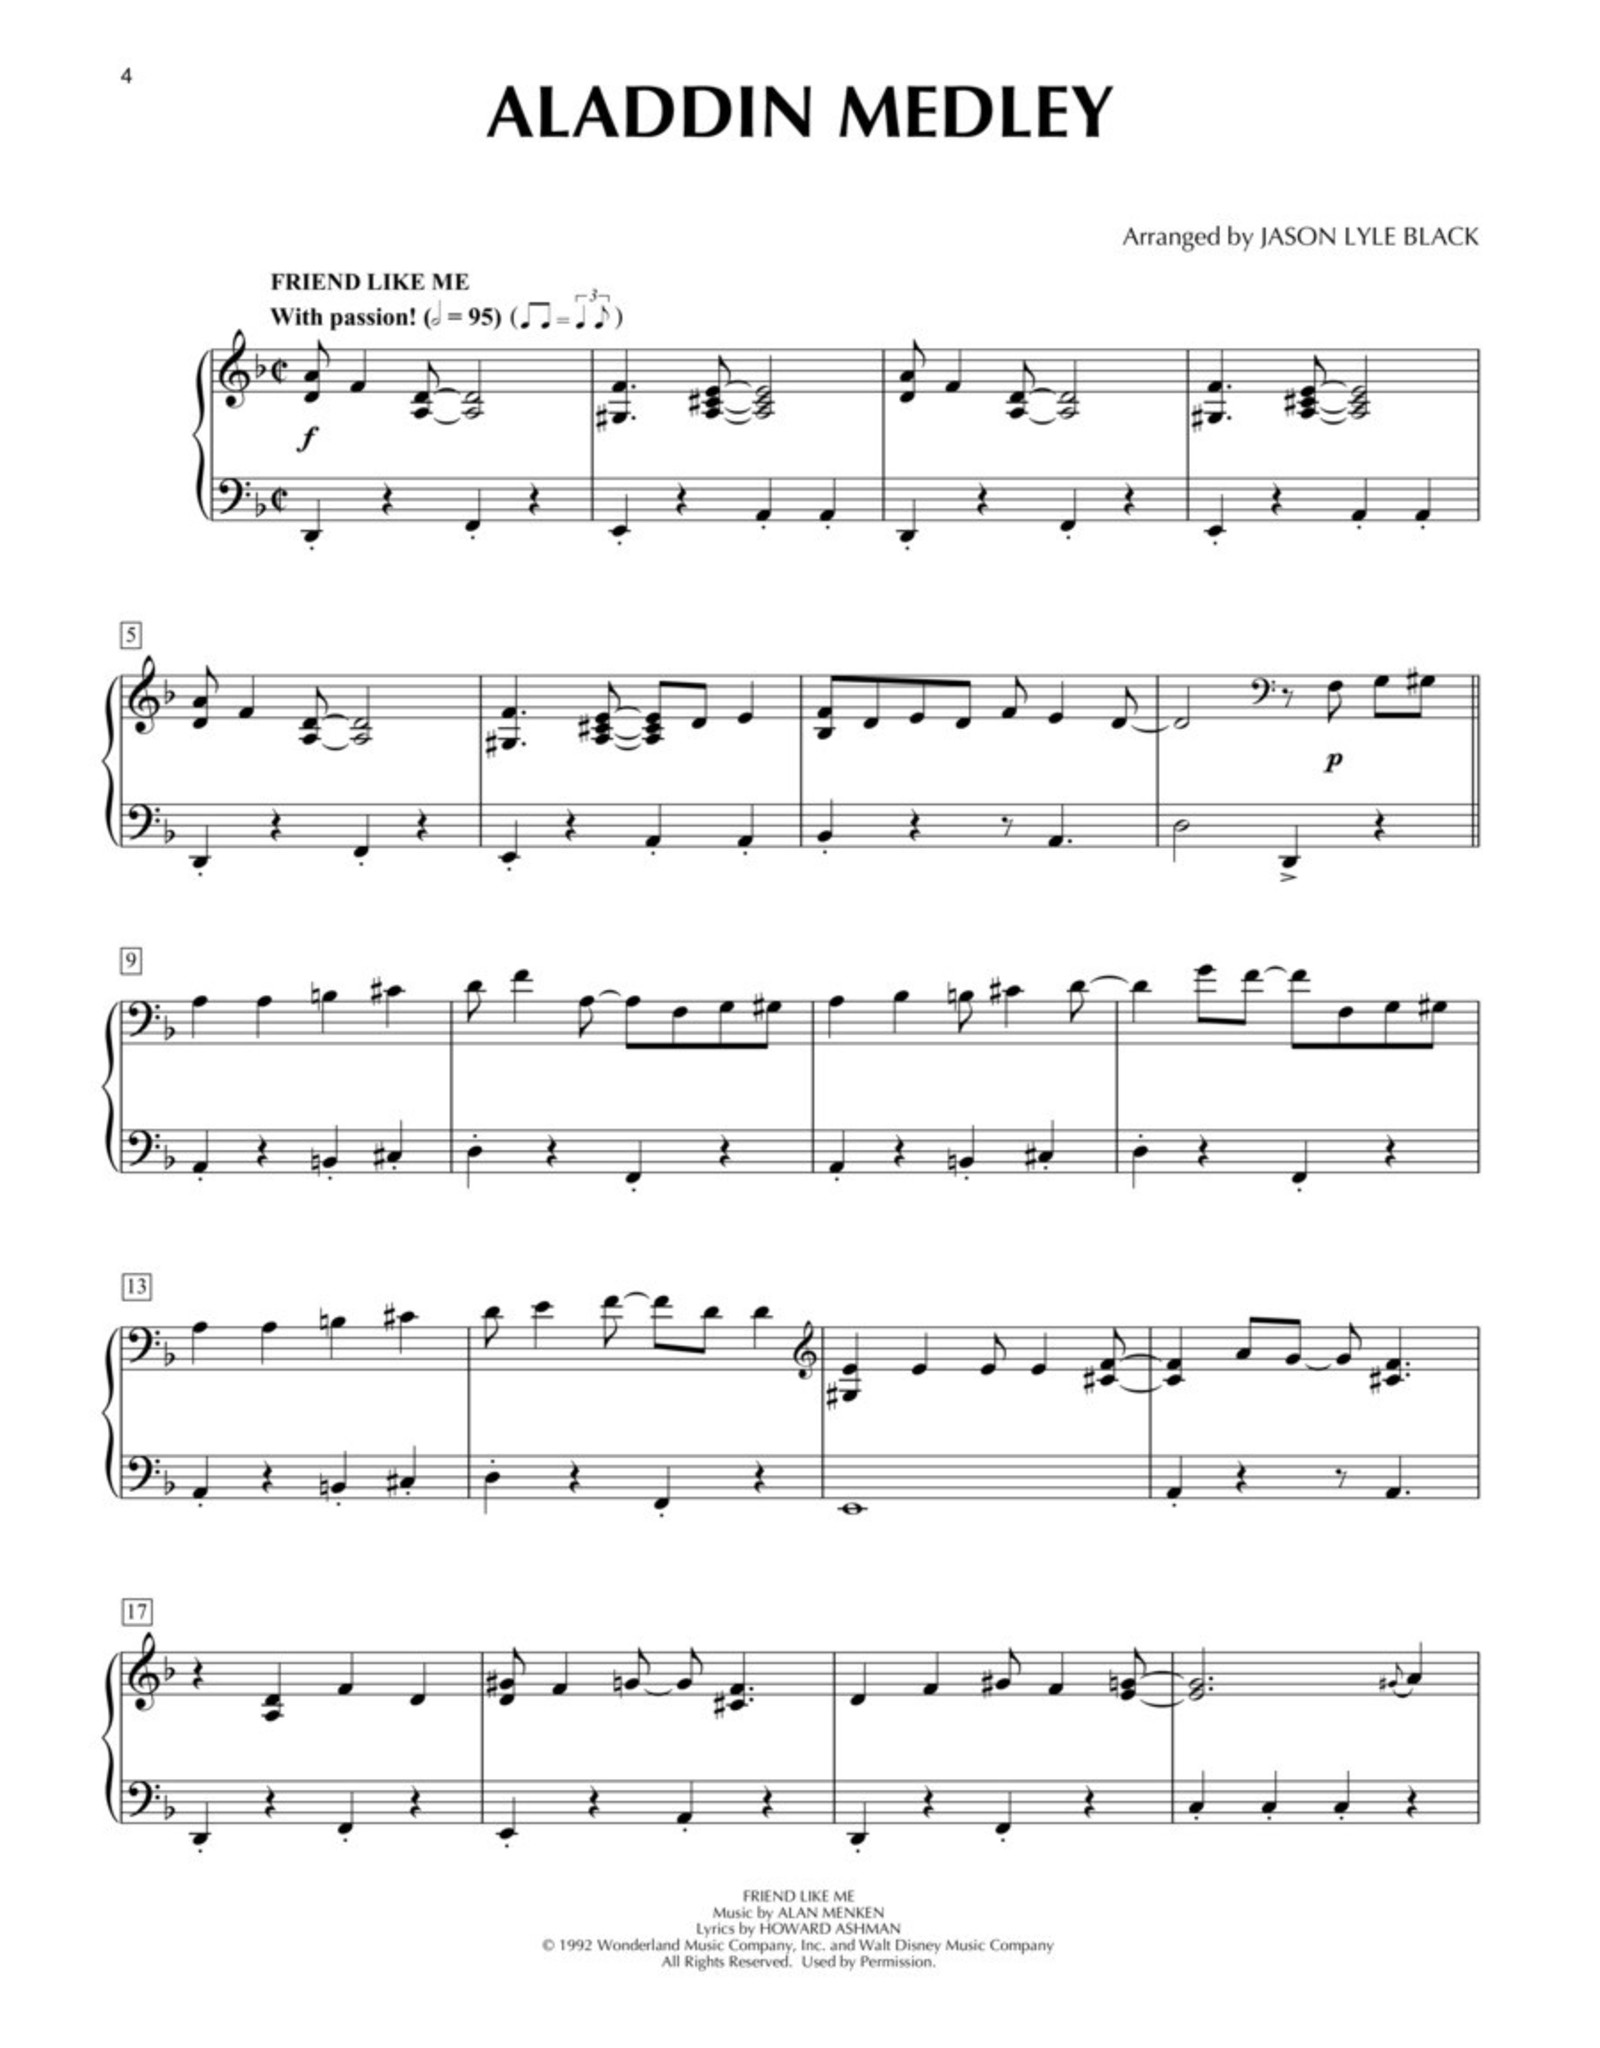 Hal Leonard Disney Medleys for Piano Solo arr. Jason Lyle Black